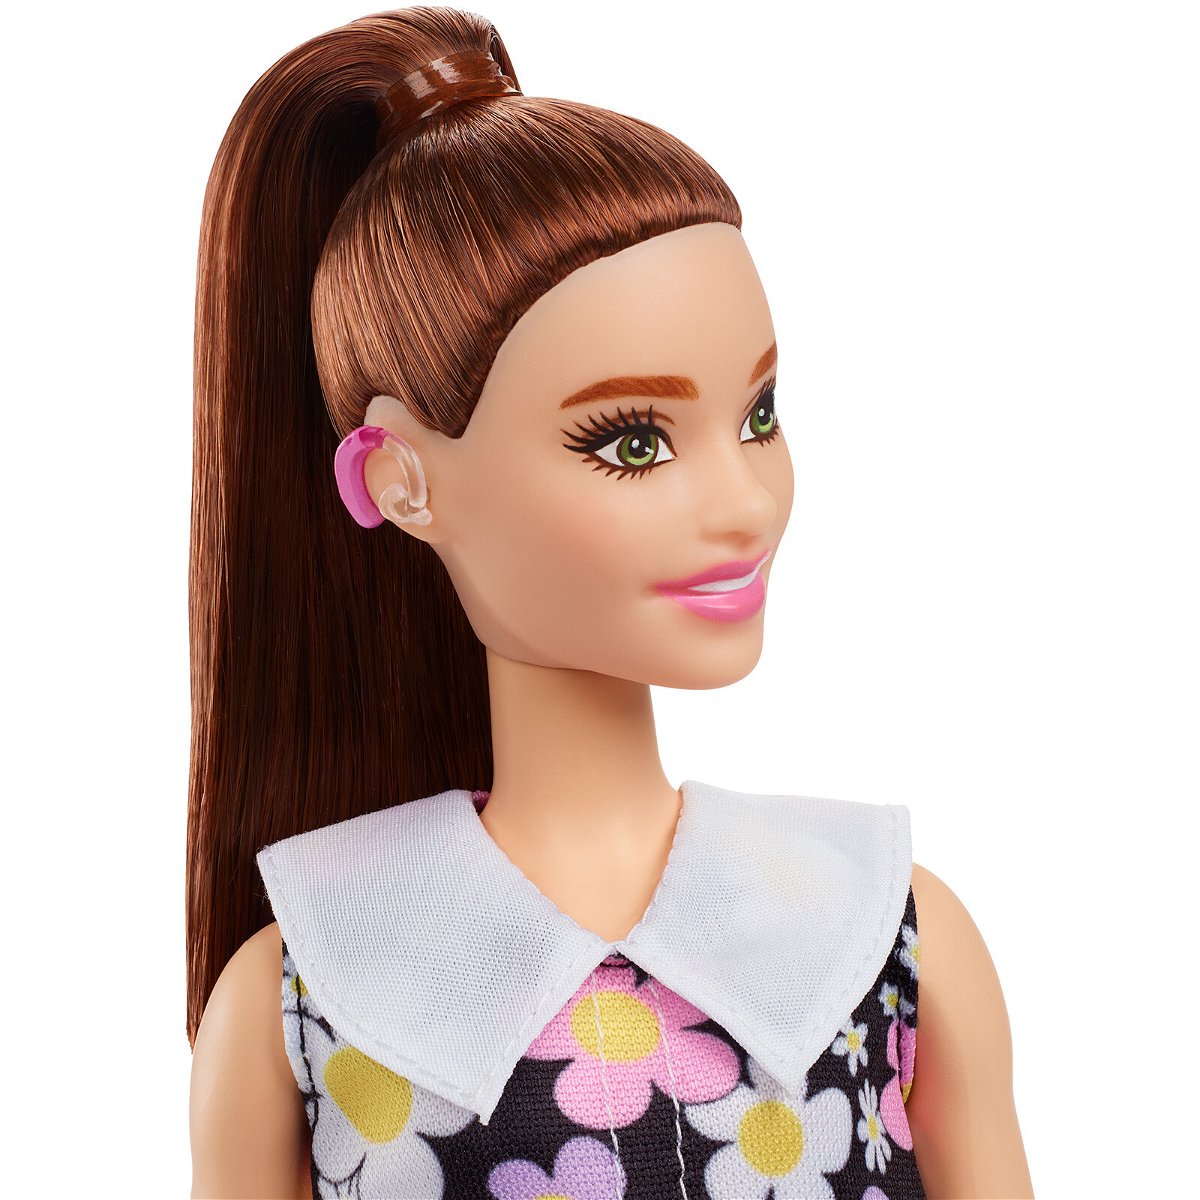 <i>Mattel</i><br/>Barbie unveils hearing impaired doll.